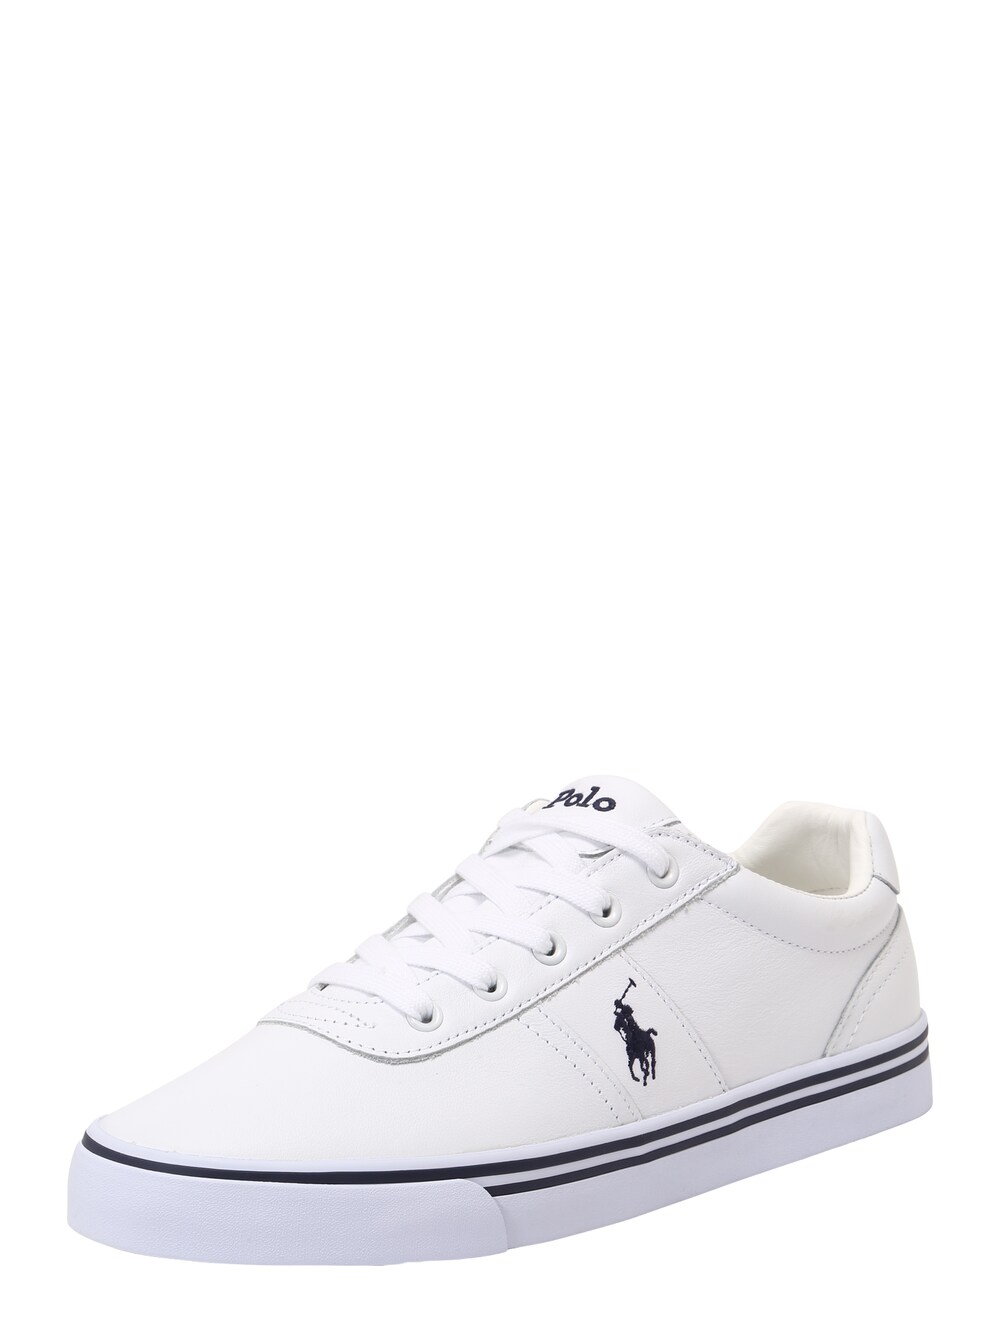 Кроссовки Polo Ralph Lauren Hanford, белый кроссовки polo ralph lauren hanford leather sneaker pure white